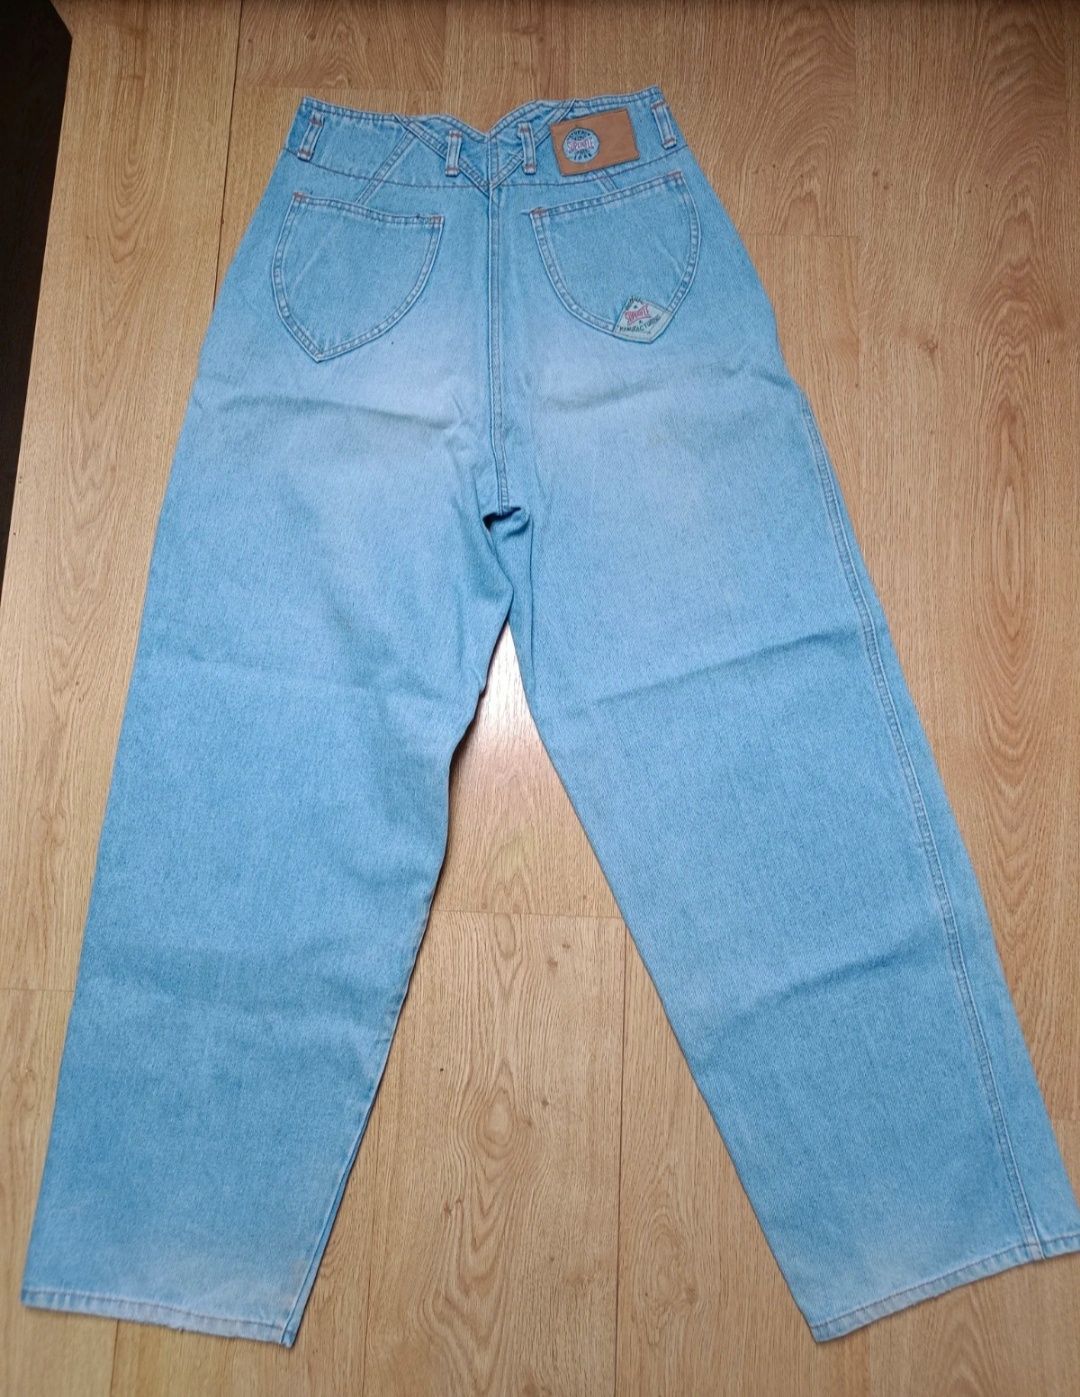 Vintage trade superifle mark denim jeansy proste szerokie 36 S